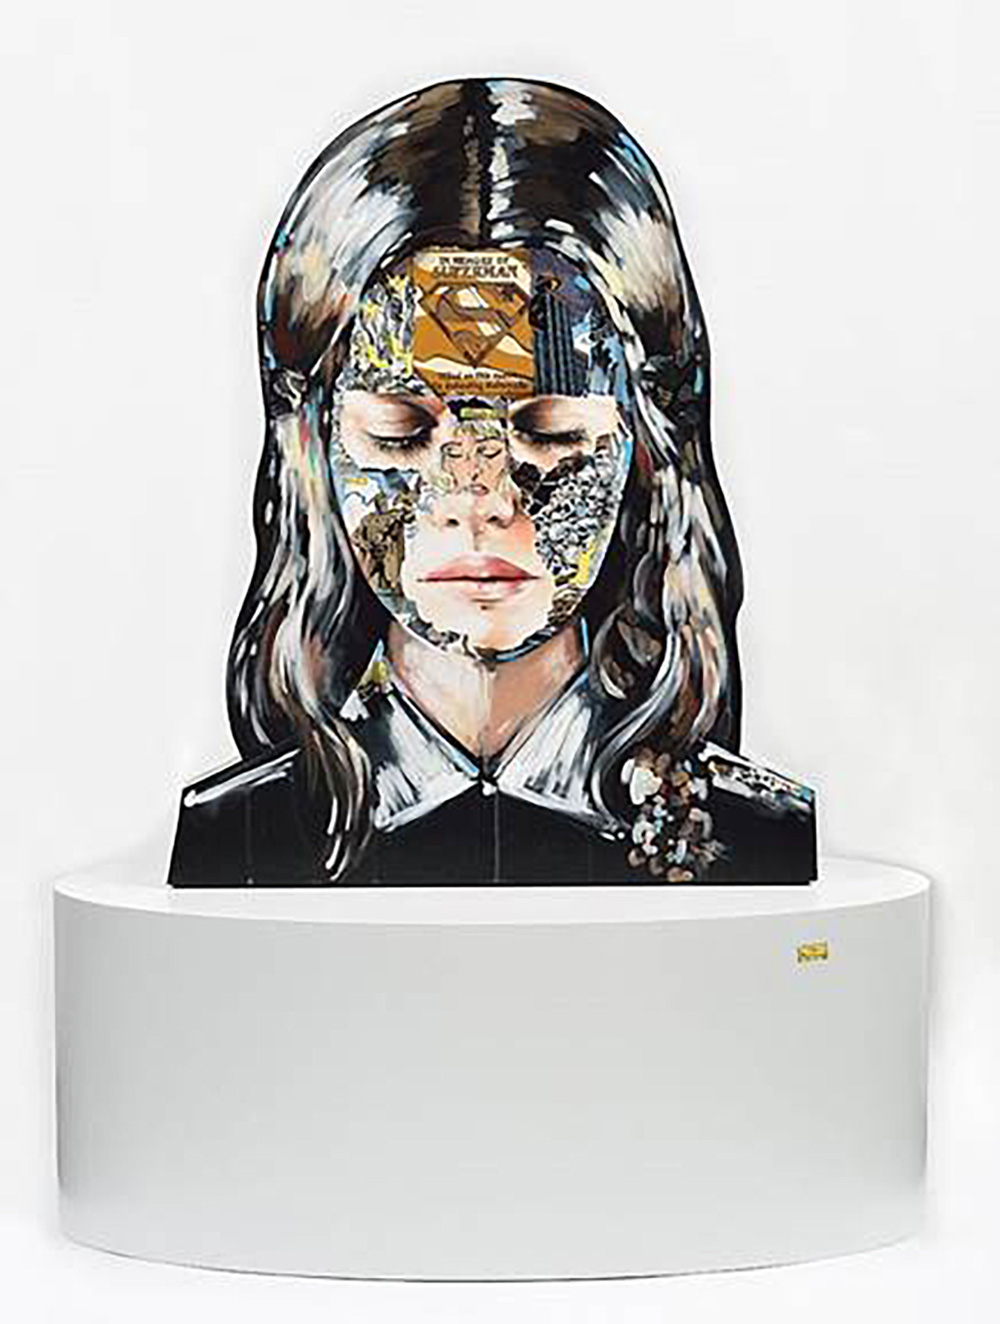 Sandra Chevrier, La Cage et le commencement, 2015, acrylic on hand carved wood panel, 50” x 46” x 24”, Courtesy of C.O.A. Gallery, Montréal,  Québec, Canada